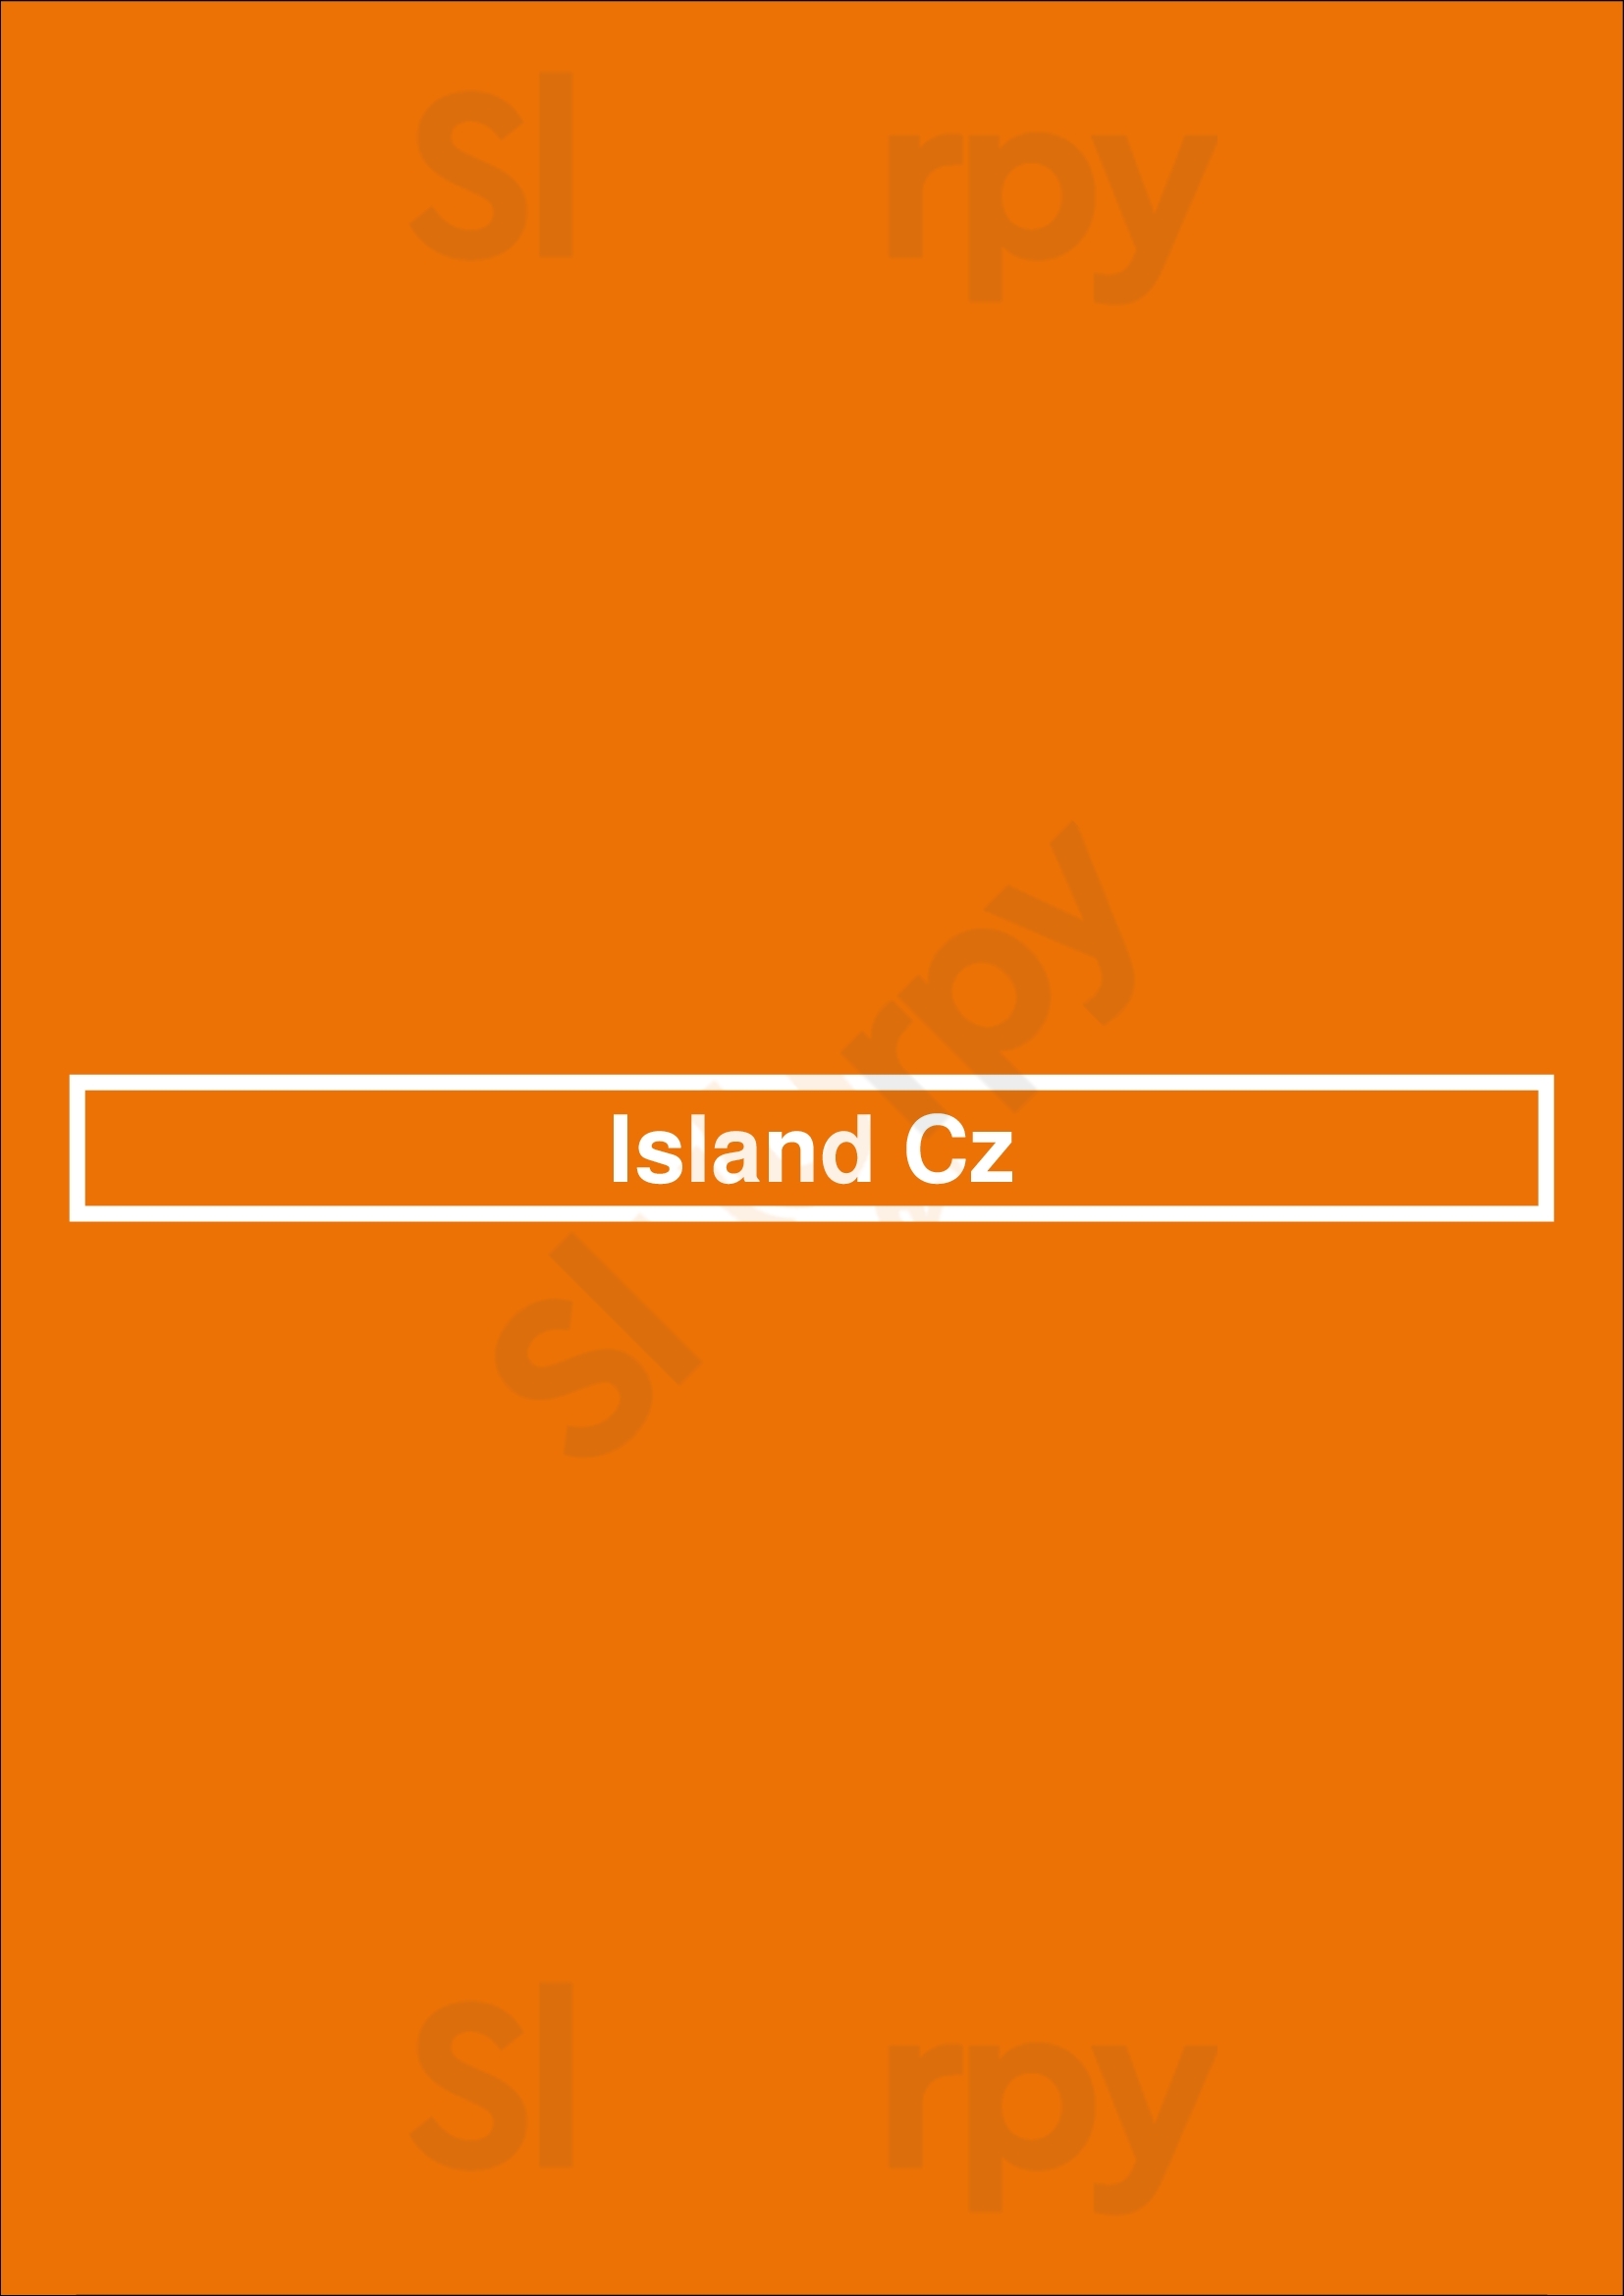 Island Cz Brooklyn Menu - 1